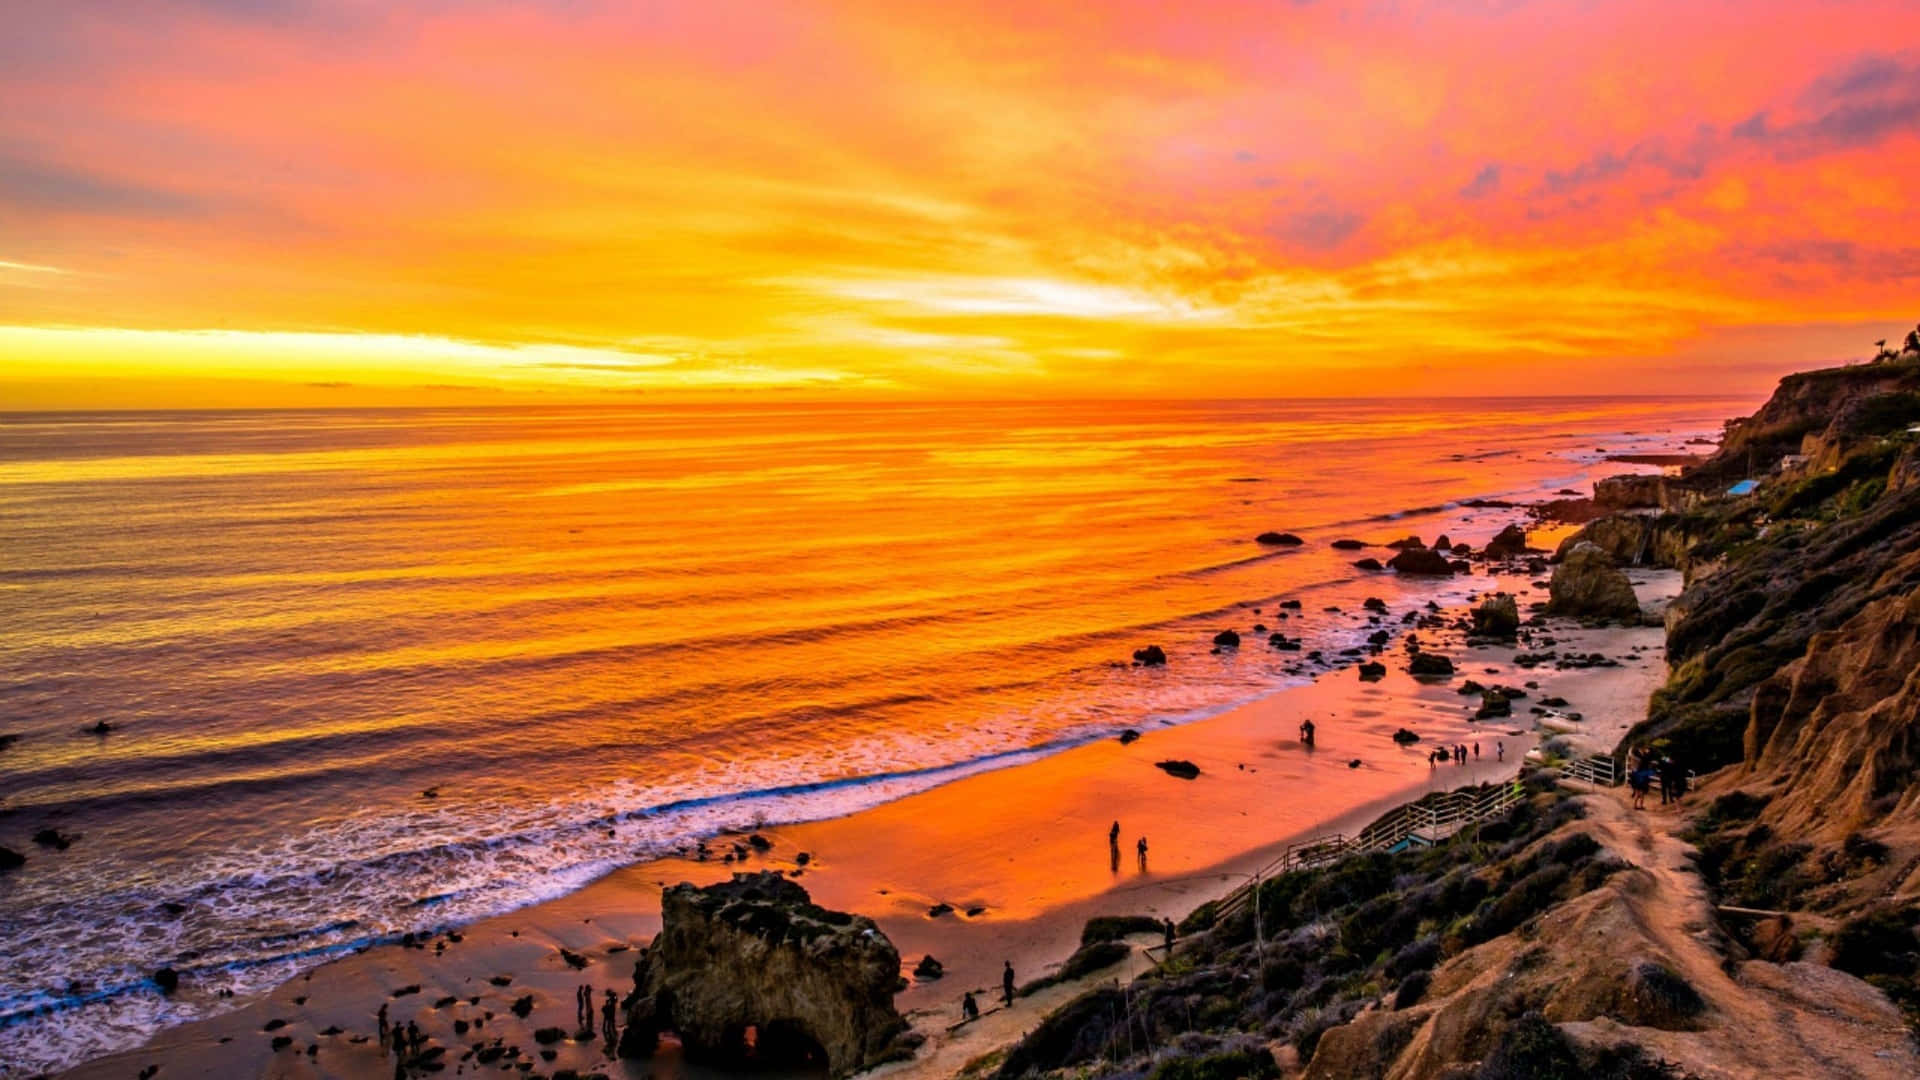 Enjoy a Relaxing Sunset Over Malibu